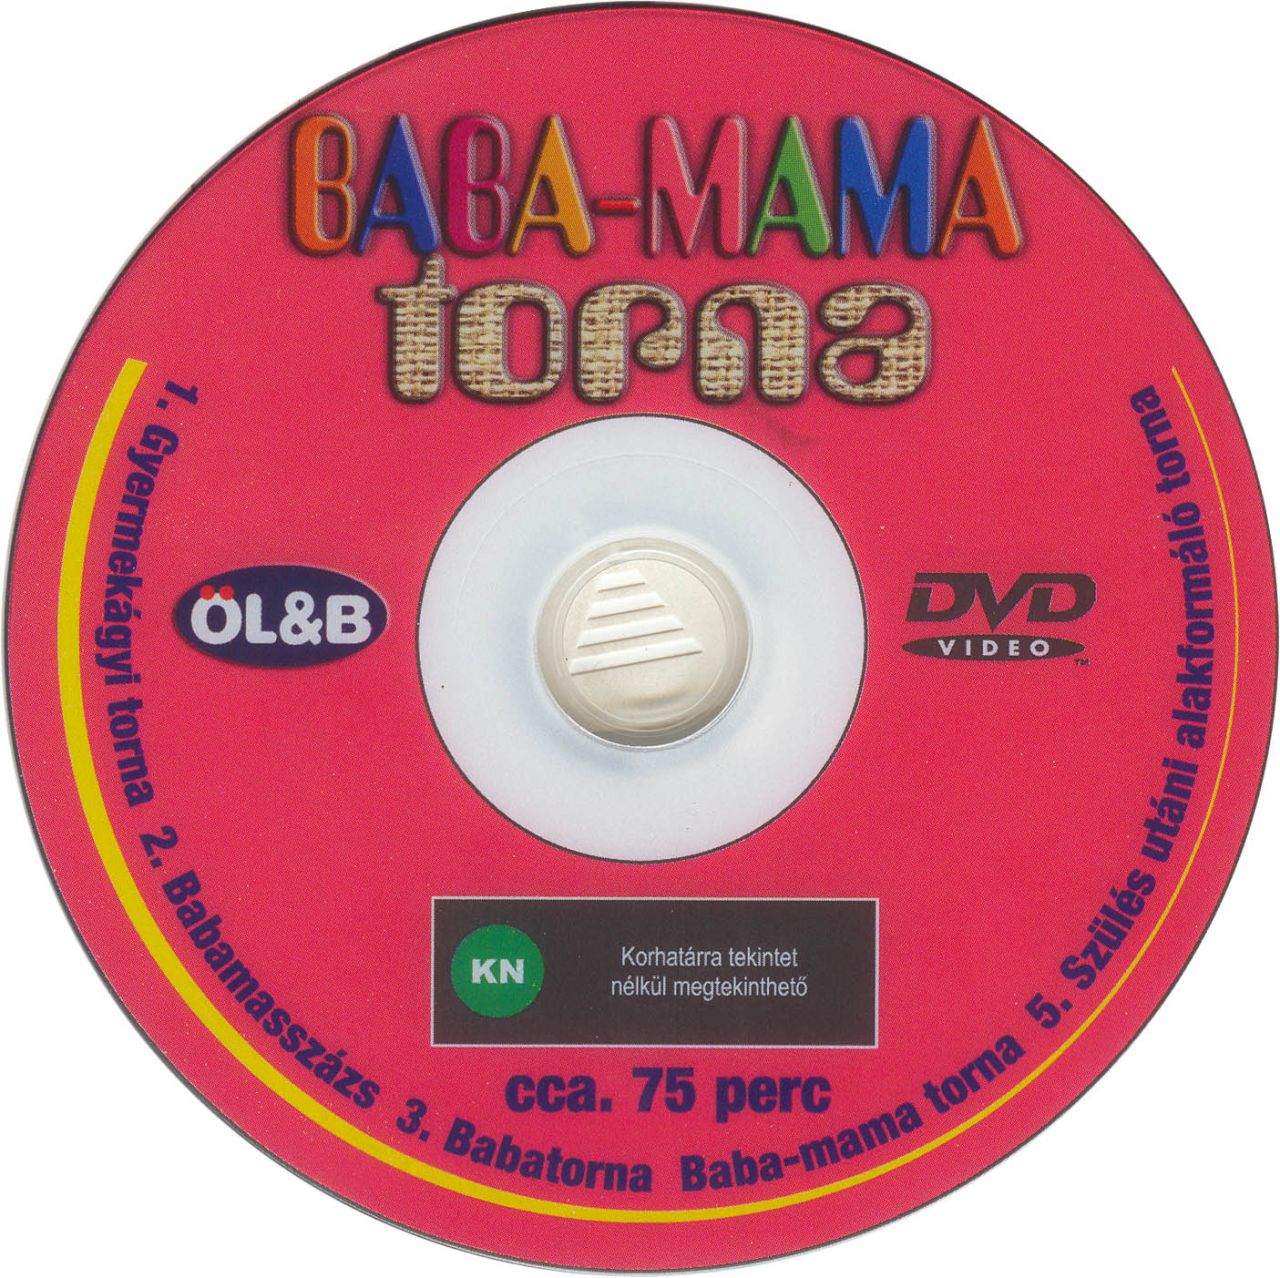 Baba-mama torna (DVD)